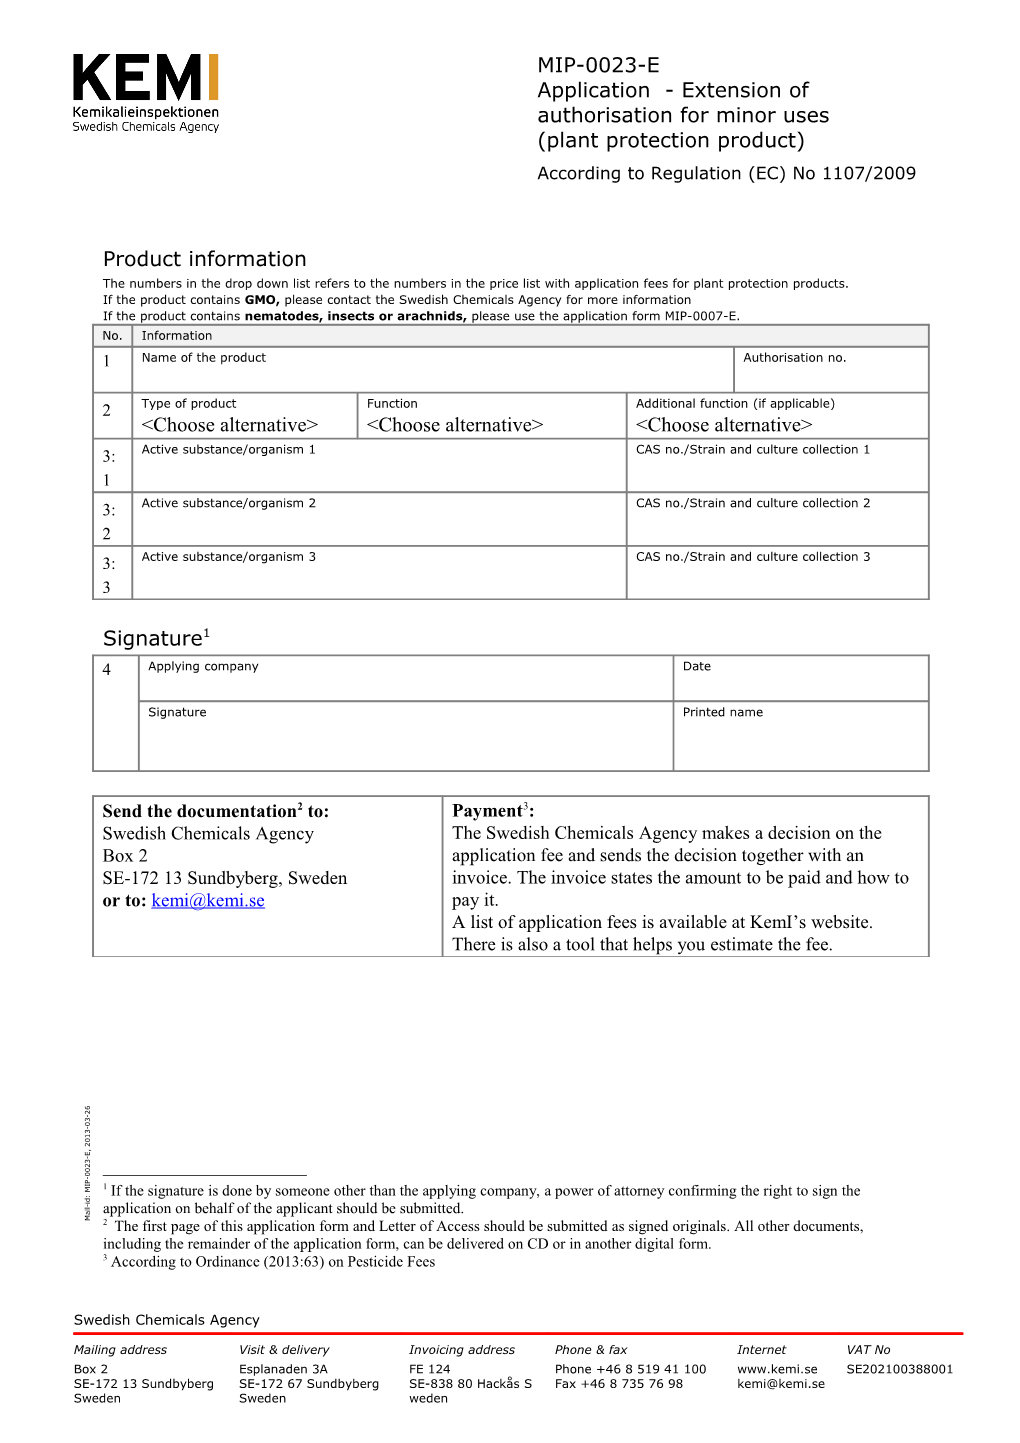 MIP-0023-E Application Form